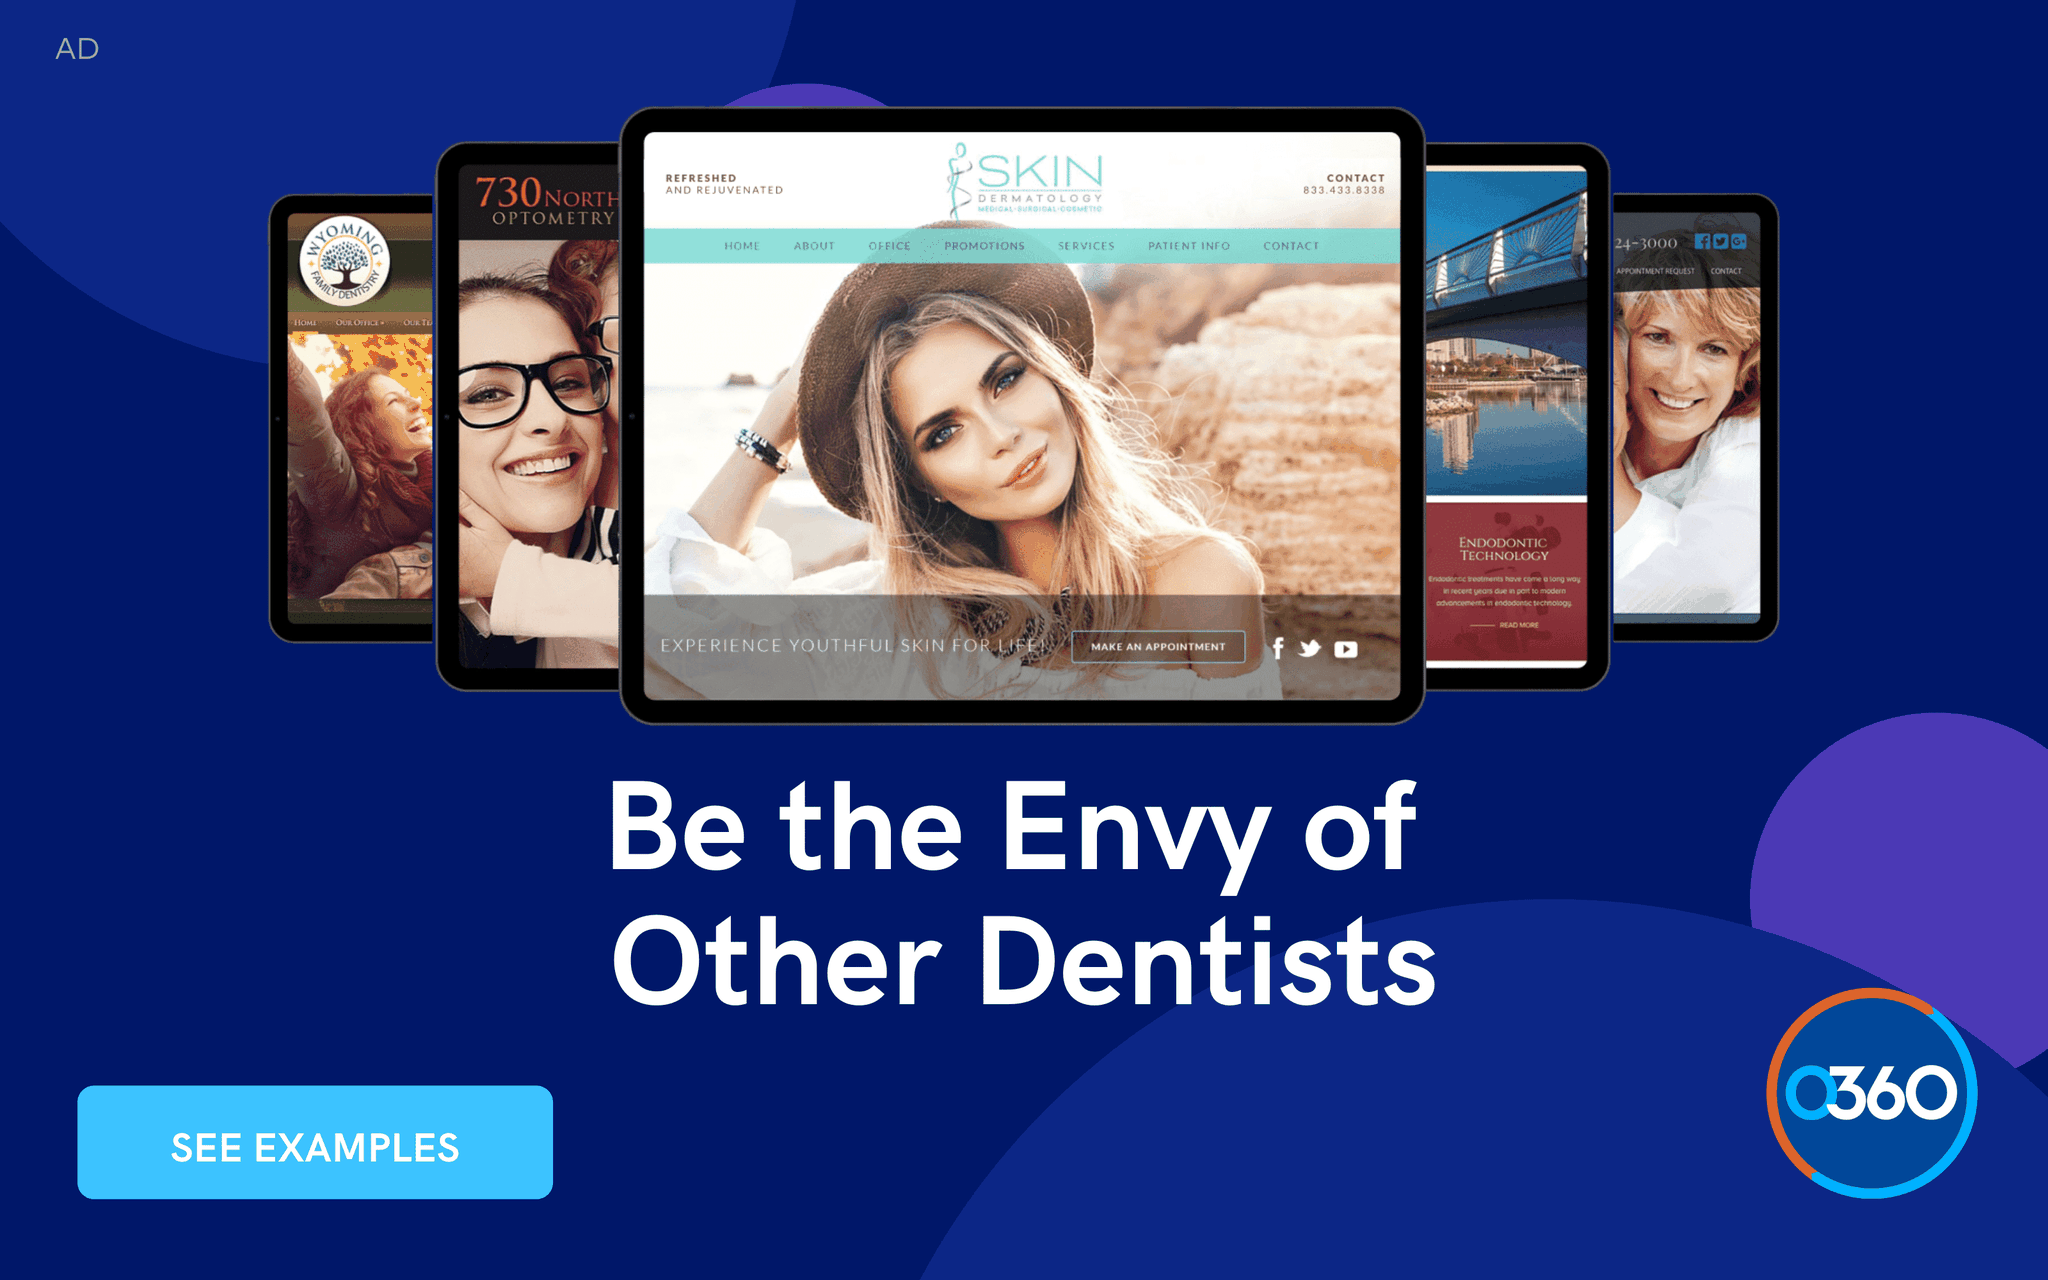 O360 ad web design for dentists